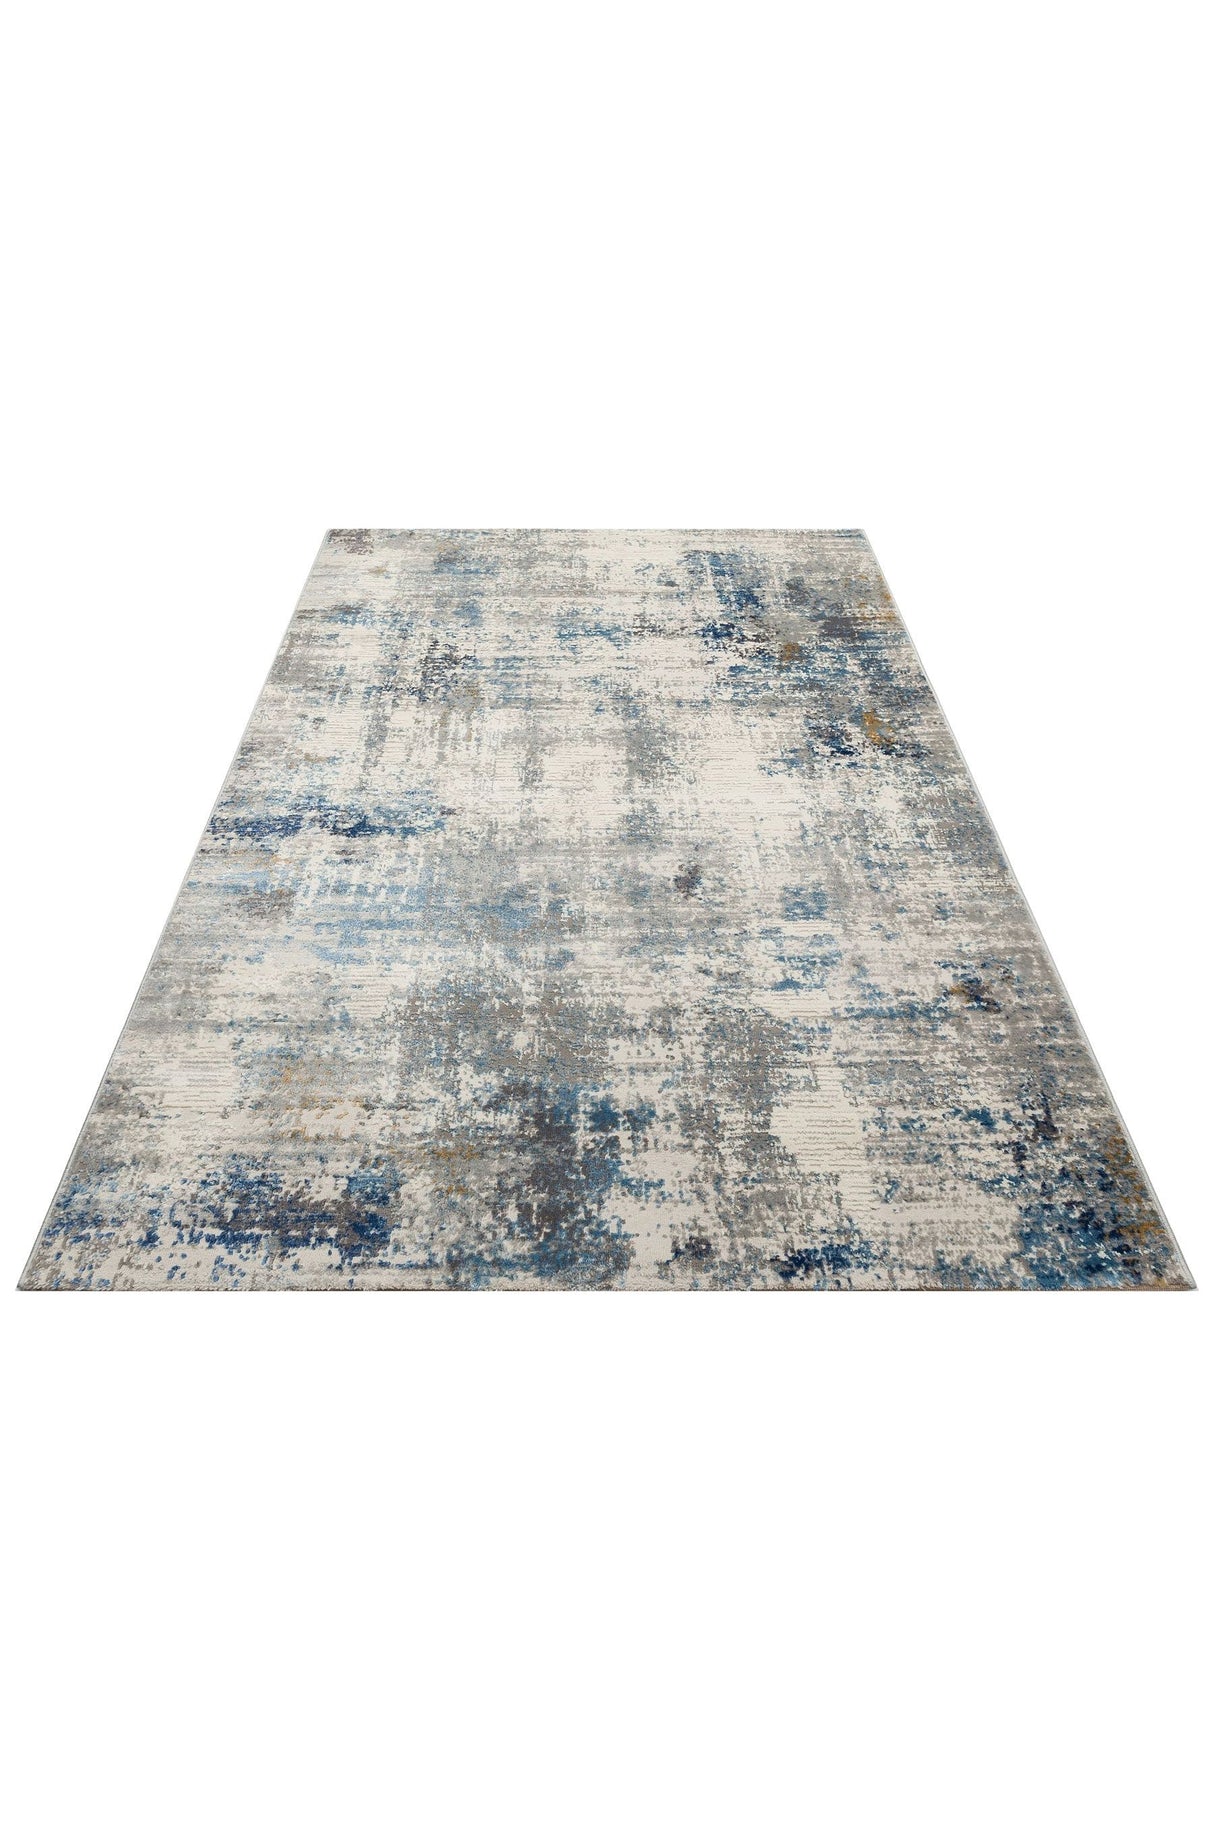 #Turkish_Carpets_Rugs# #Modern_Carpets# #Abrash_Carpets#Lgs 09 Cream Blue